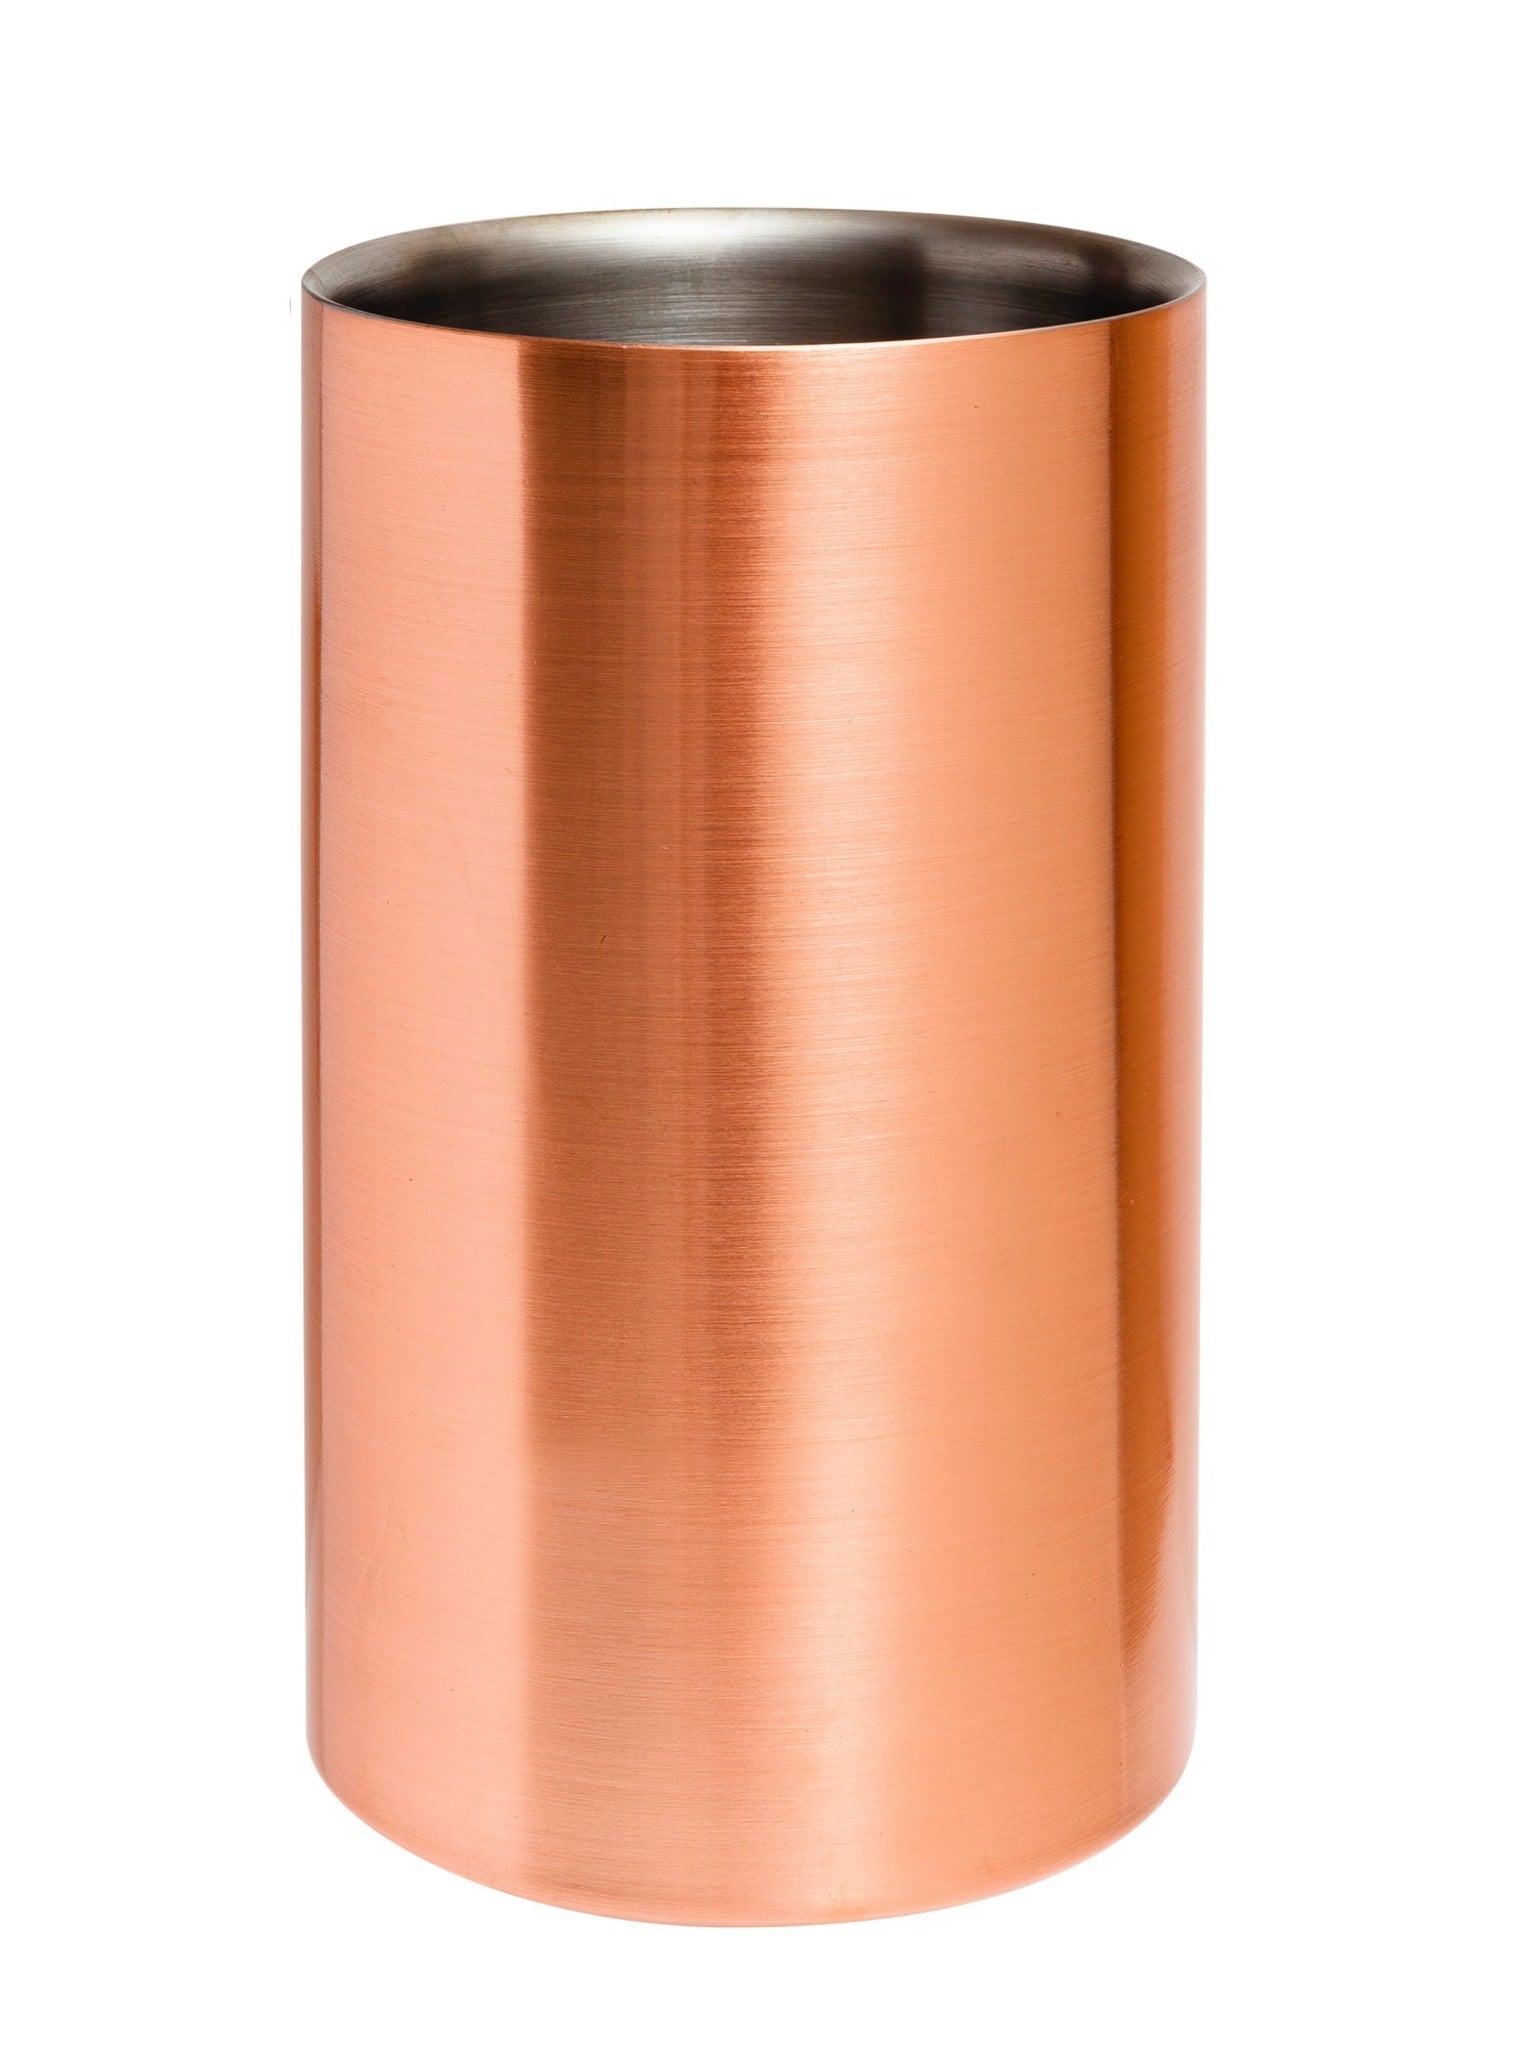 Bottlecooler copper